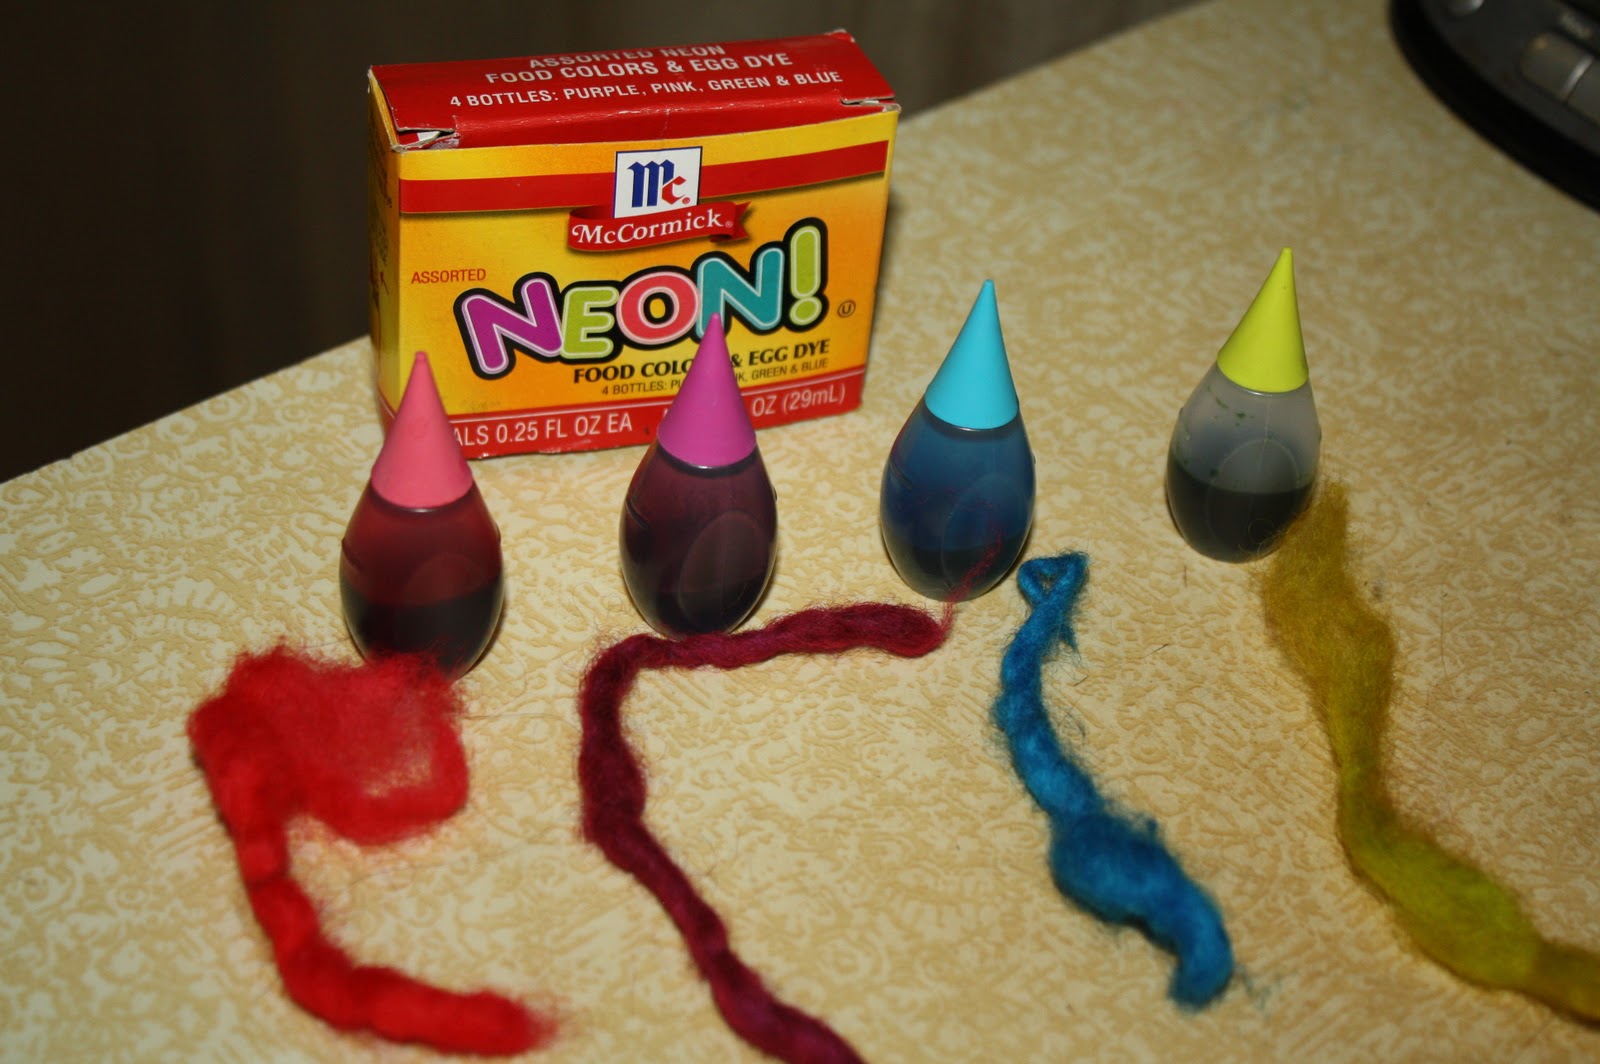 McCormick® Neon Food Colors & Egg Dye